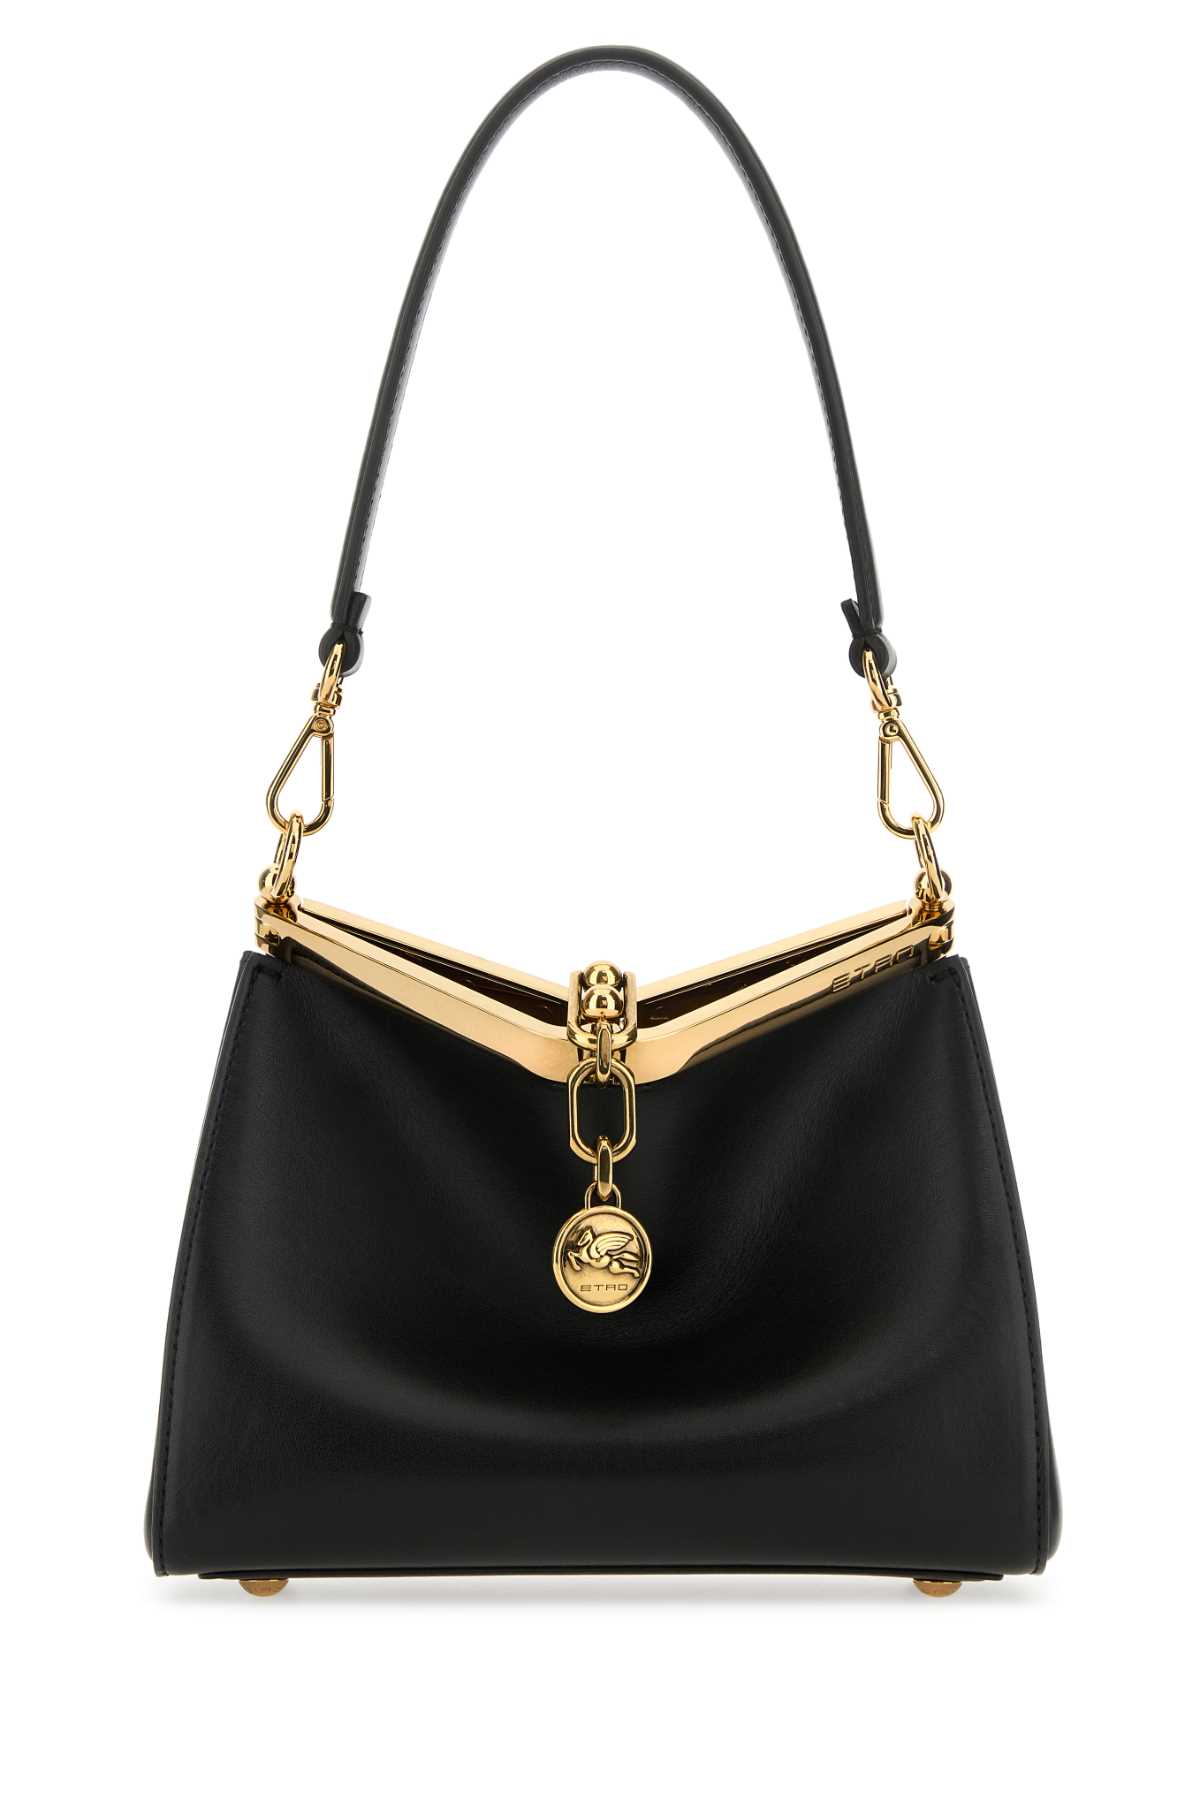 Etro Black Leather Mini Vela Handbag In N0000